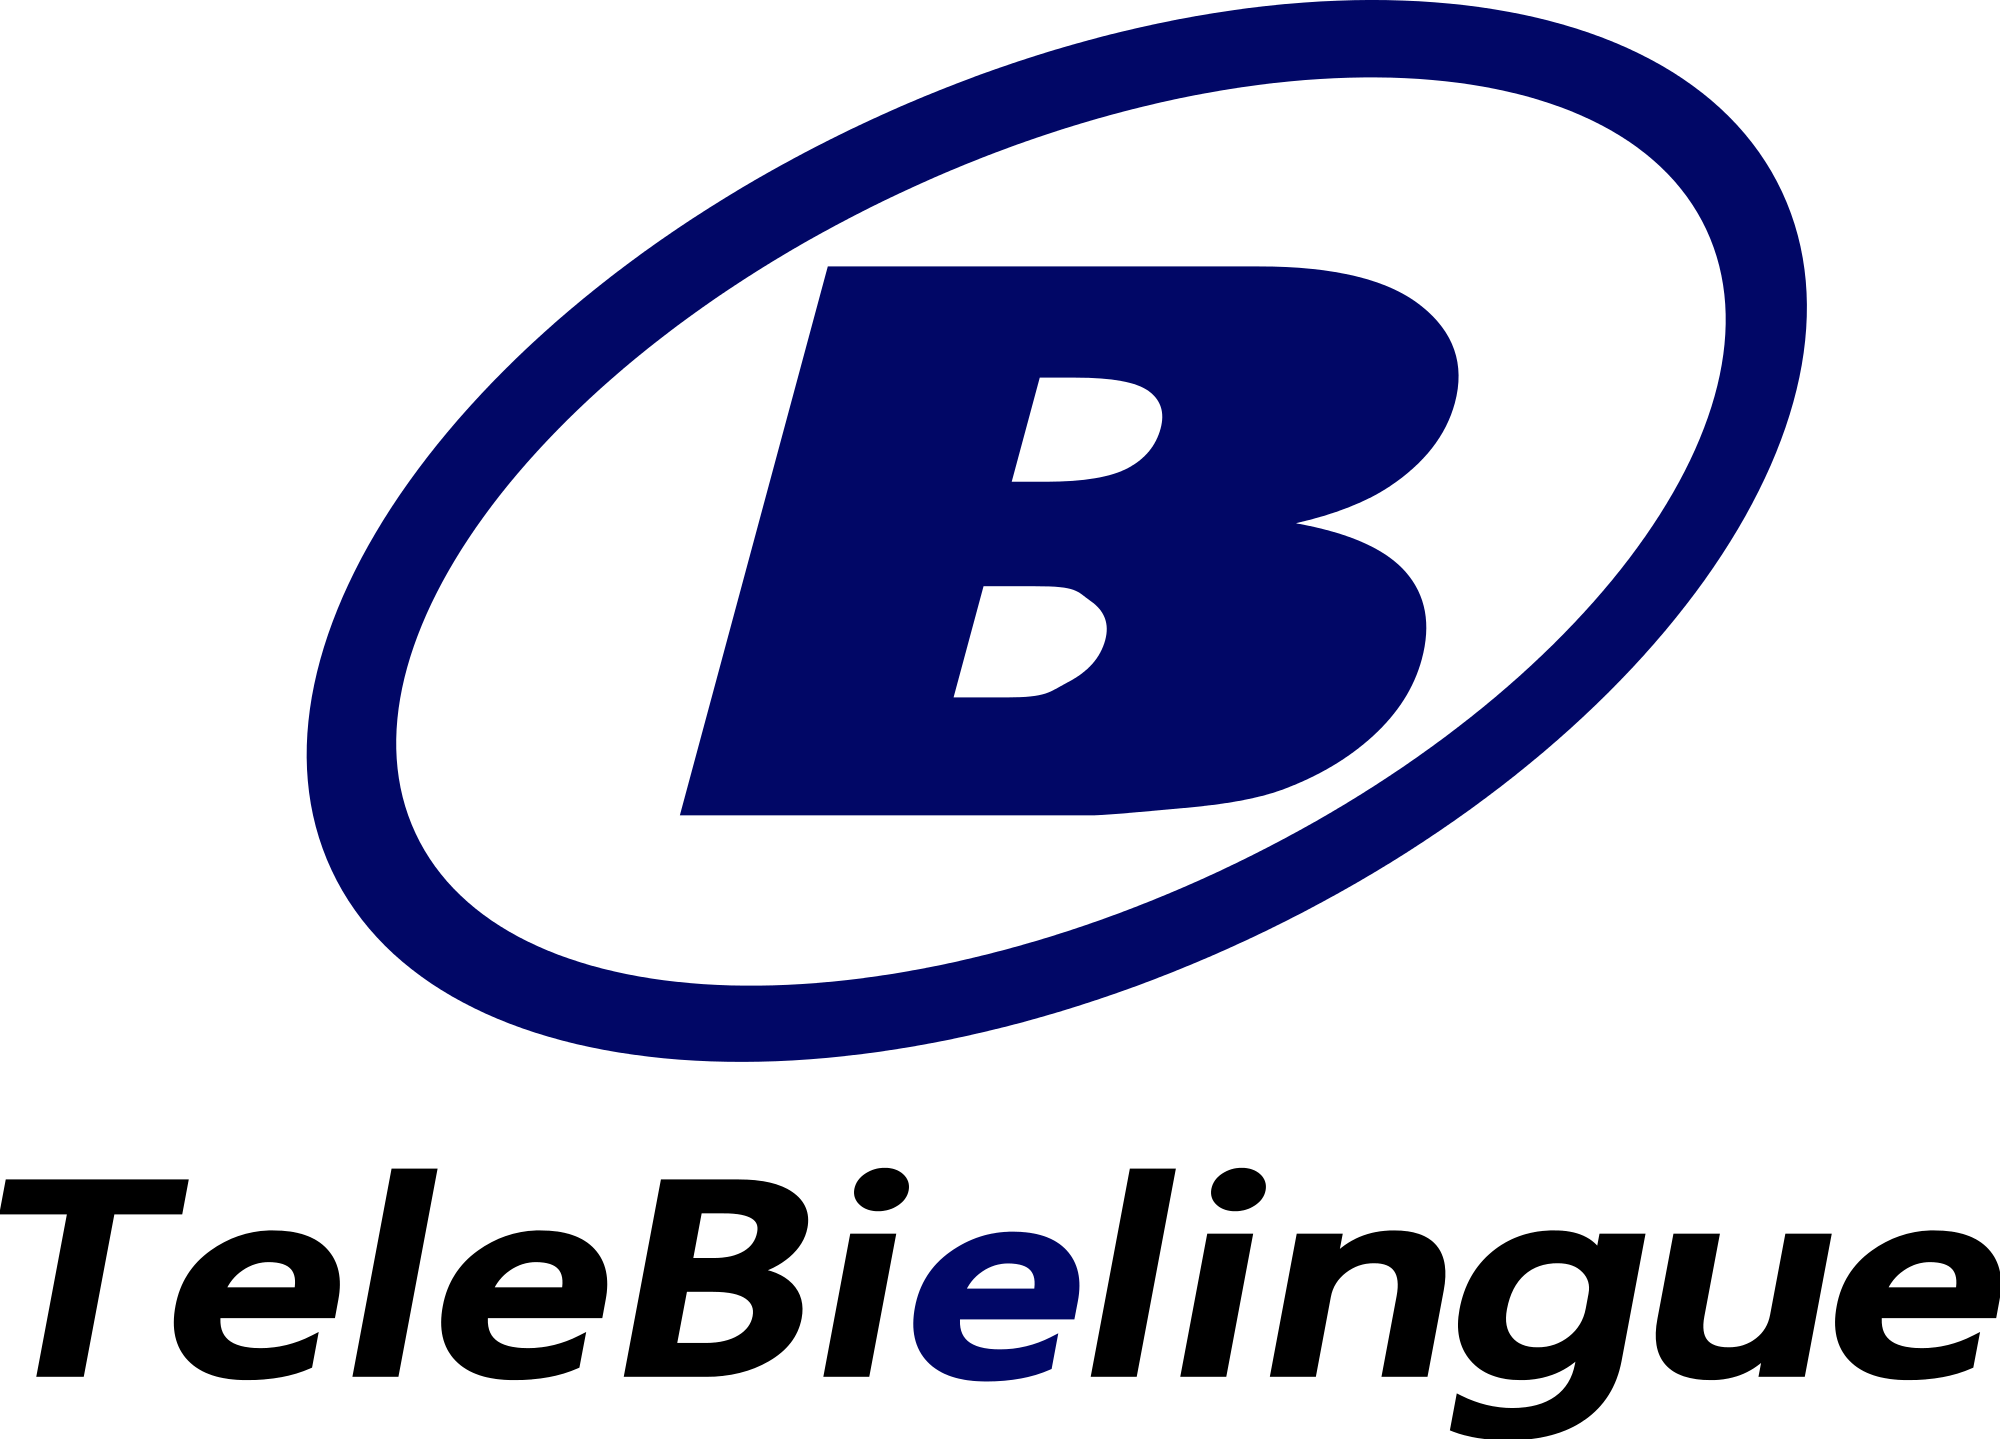 Bie Logo - File:TeleBielingue Logo.svg - Wikimedia Commons